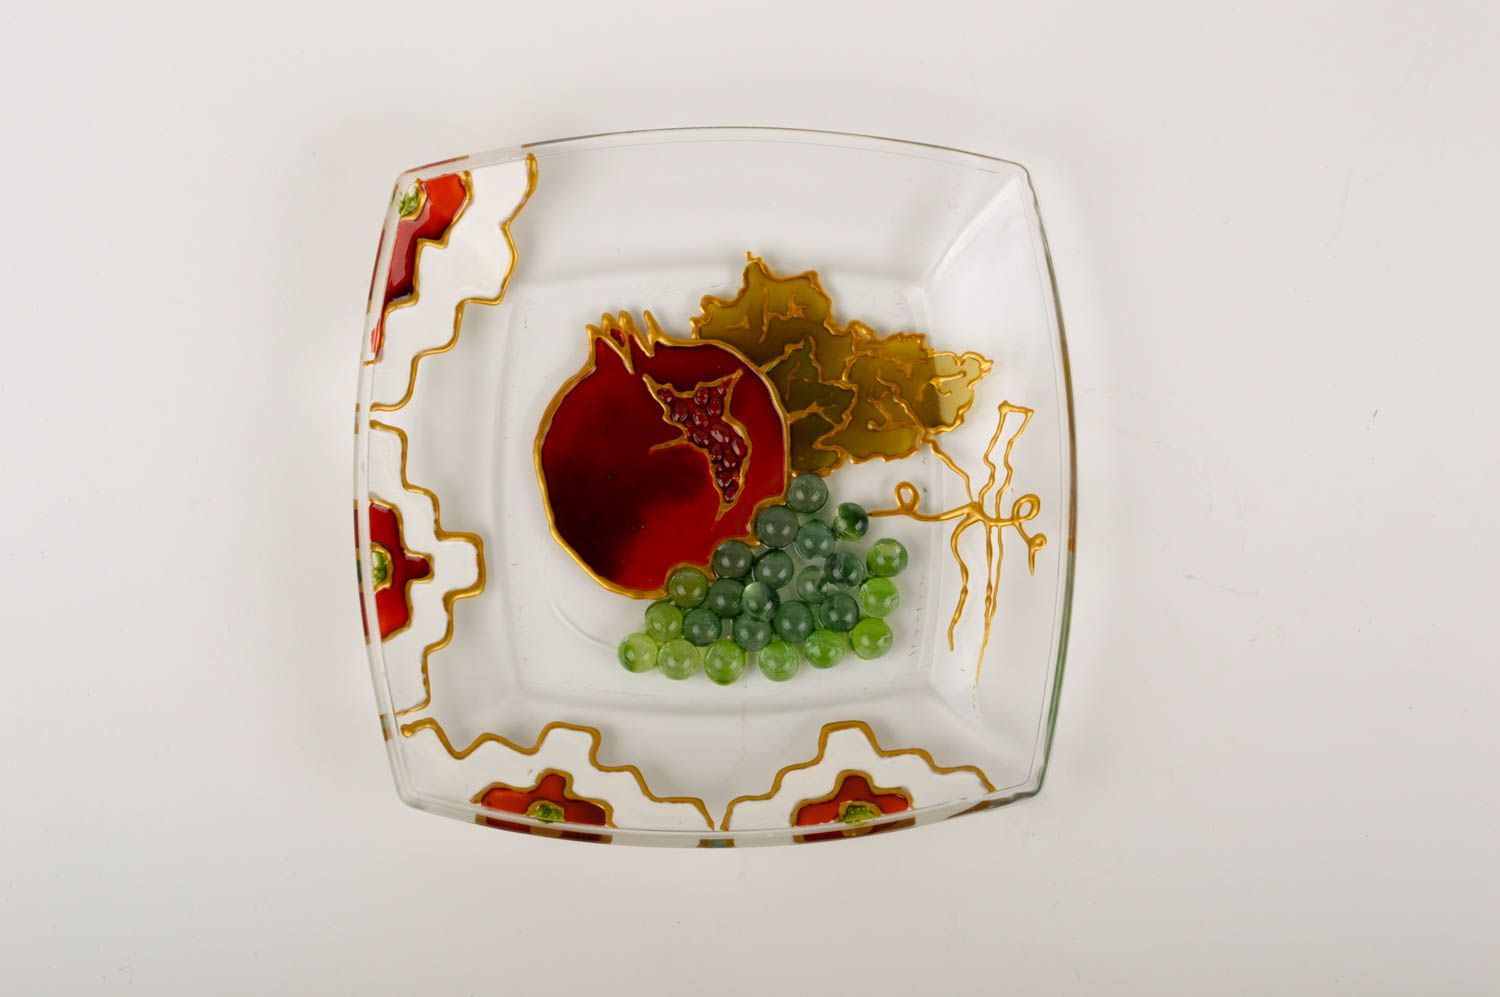 Beautiful handmade glass plate glass art small gifts decorative use only photo 2